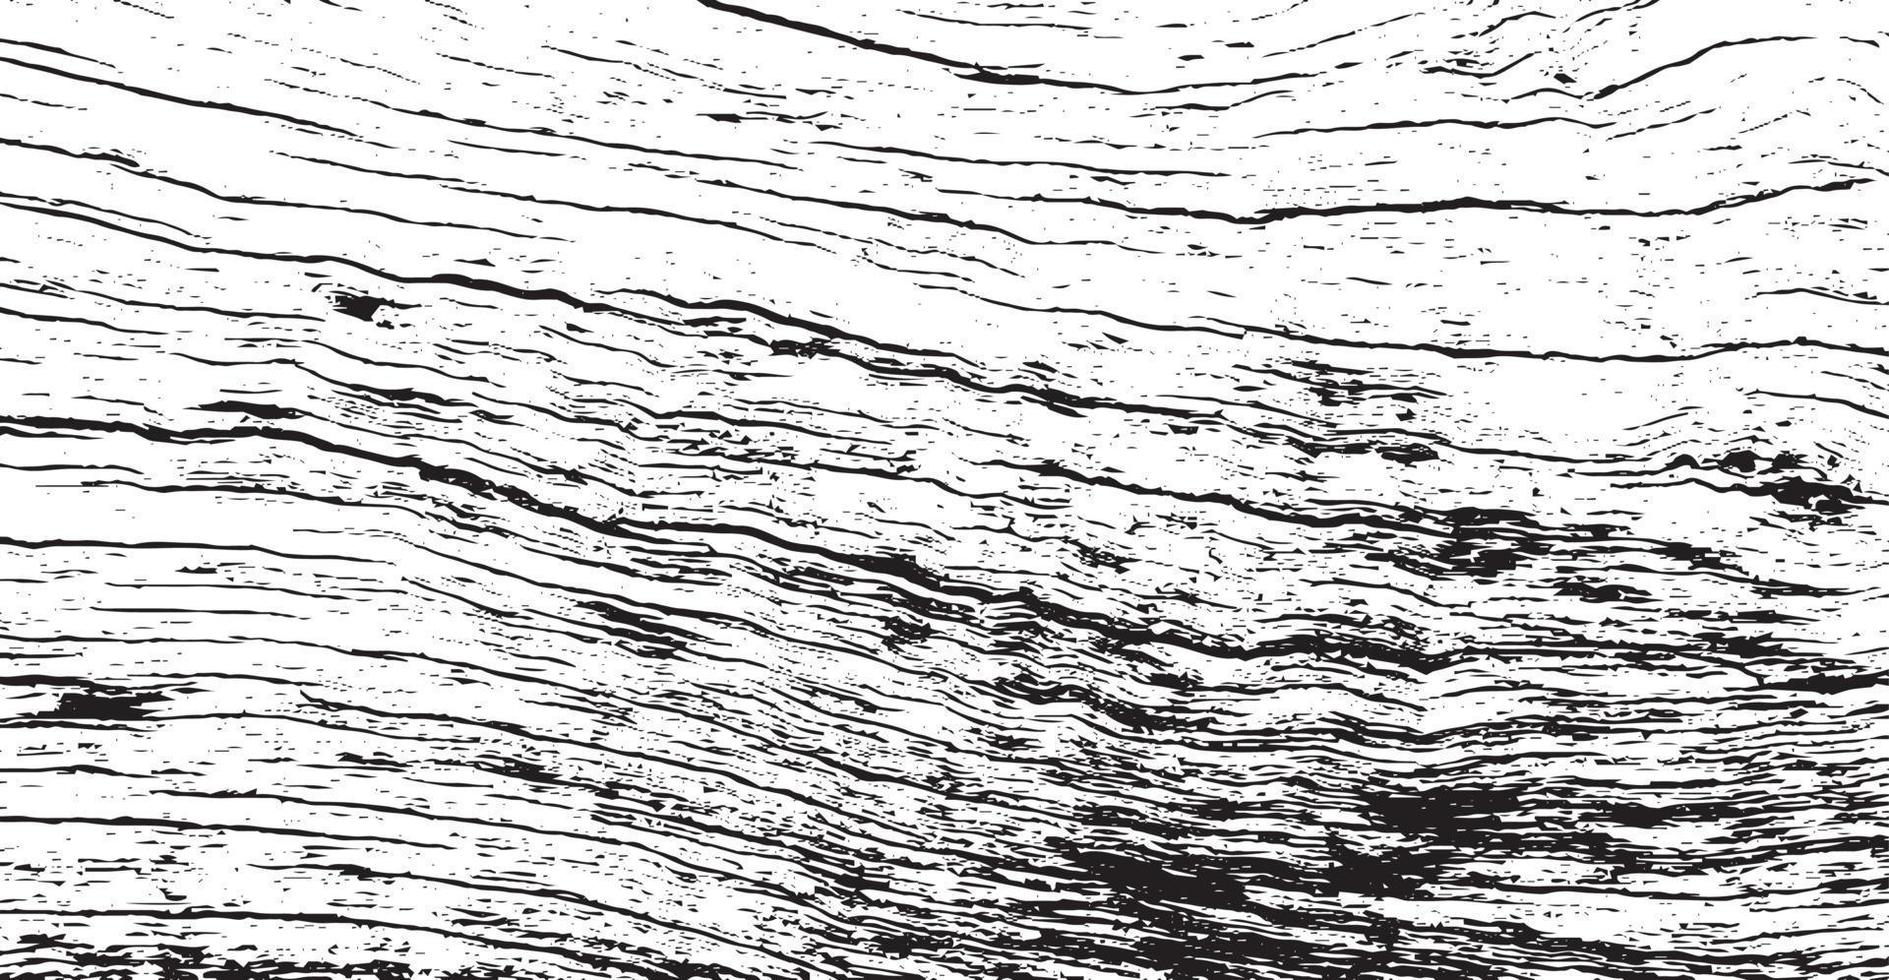 Wood texture white and black.. Grunge sketch effect. Crack design wall, floor, old design.eps vector